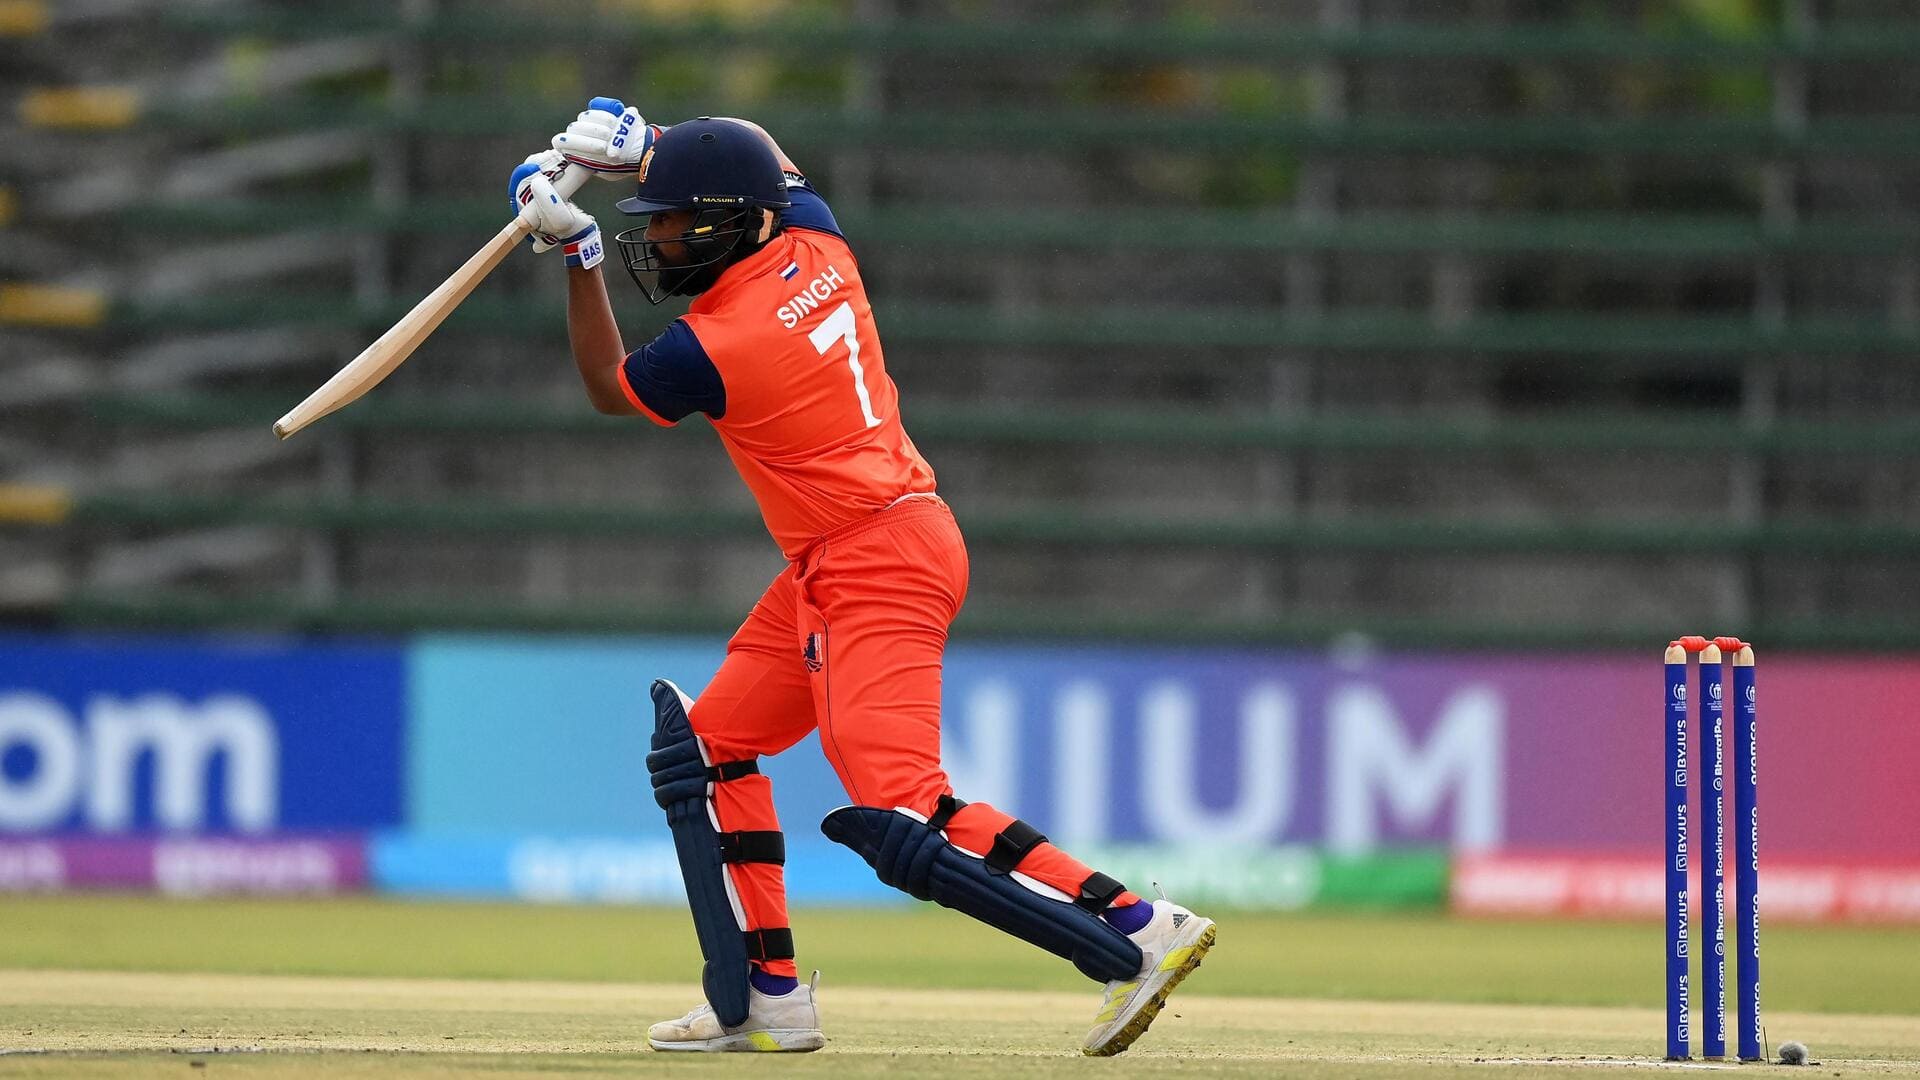 CWC Qualifiers: Vikramjit Singh smokes his maiden ODI century